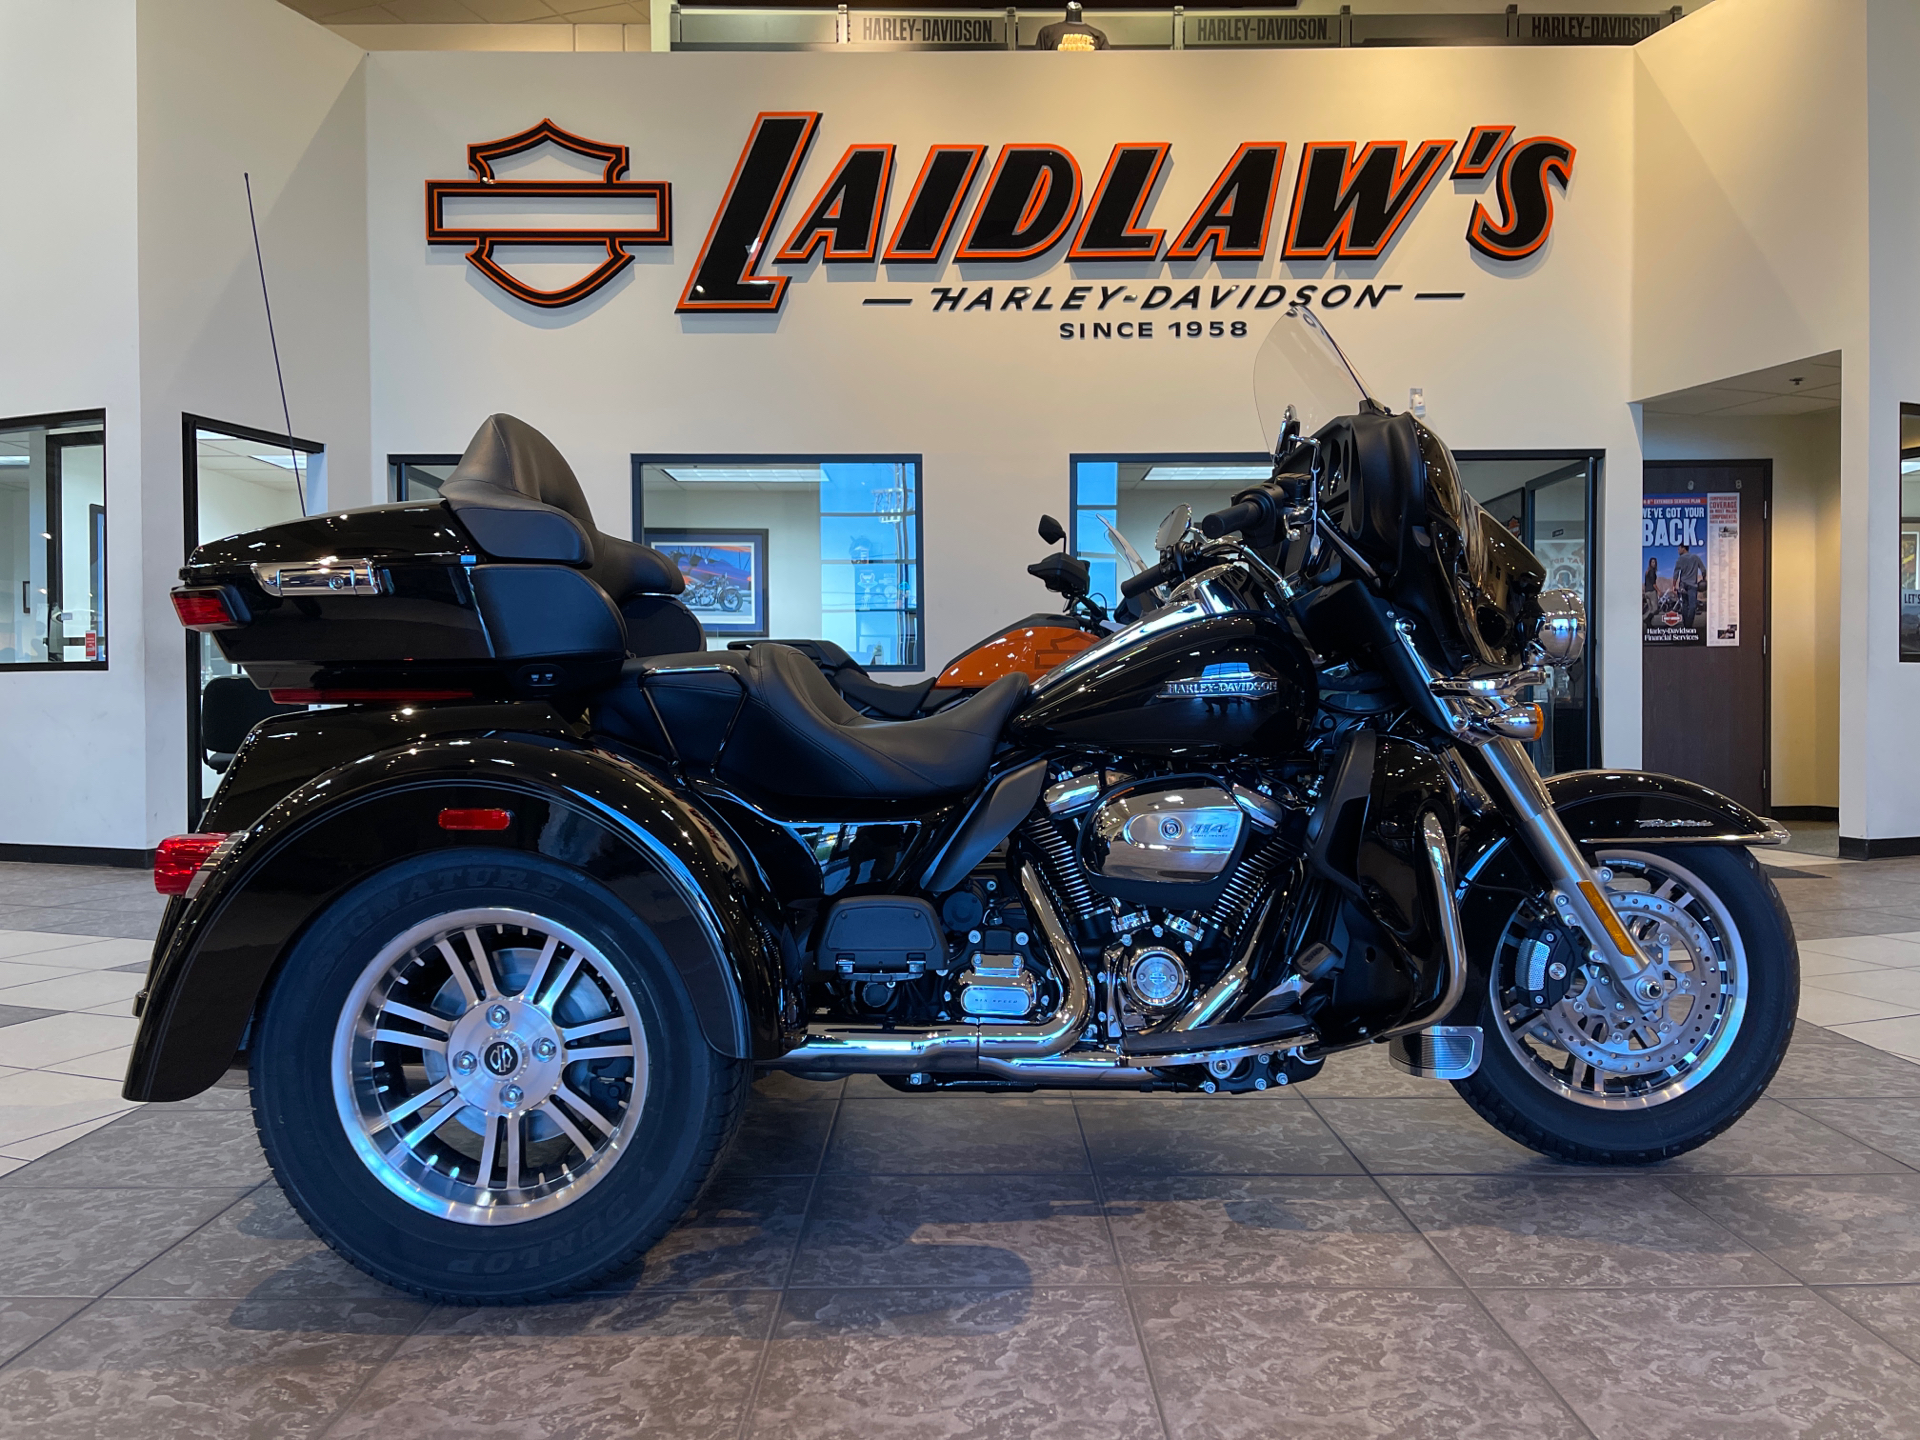 New 2021 Harley Davidson Tri Glide Ultra Vivid Black Baldwin Park Ca 29134